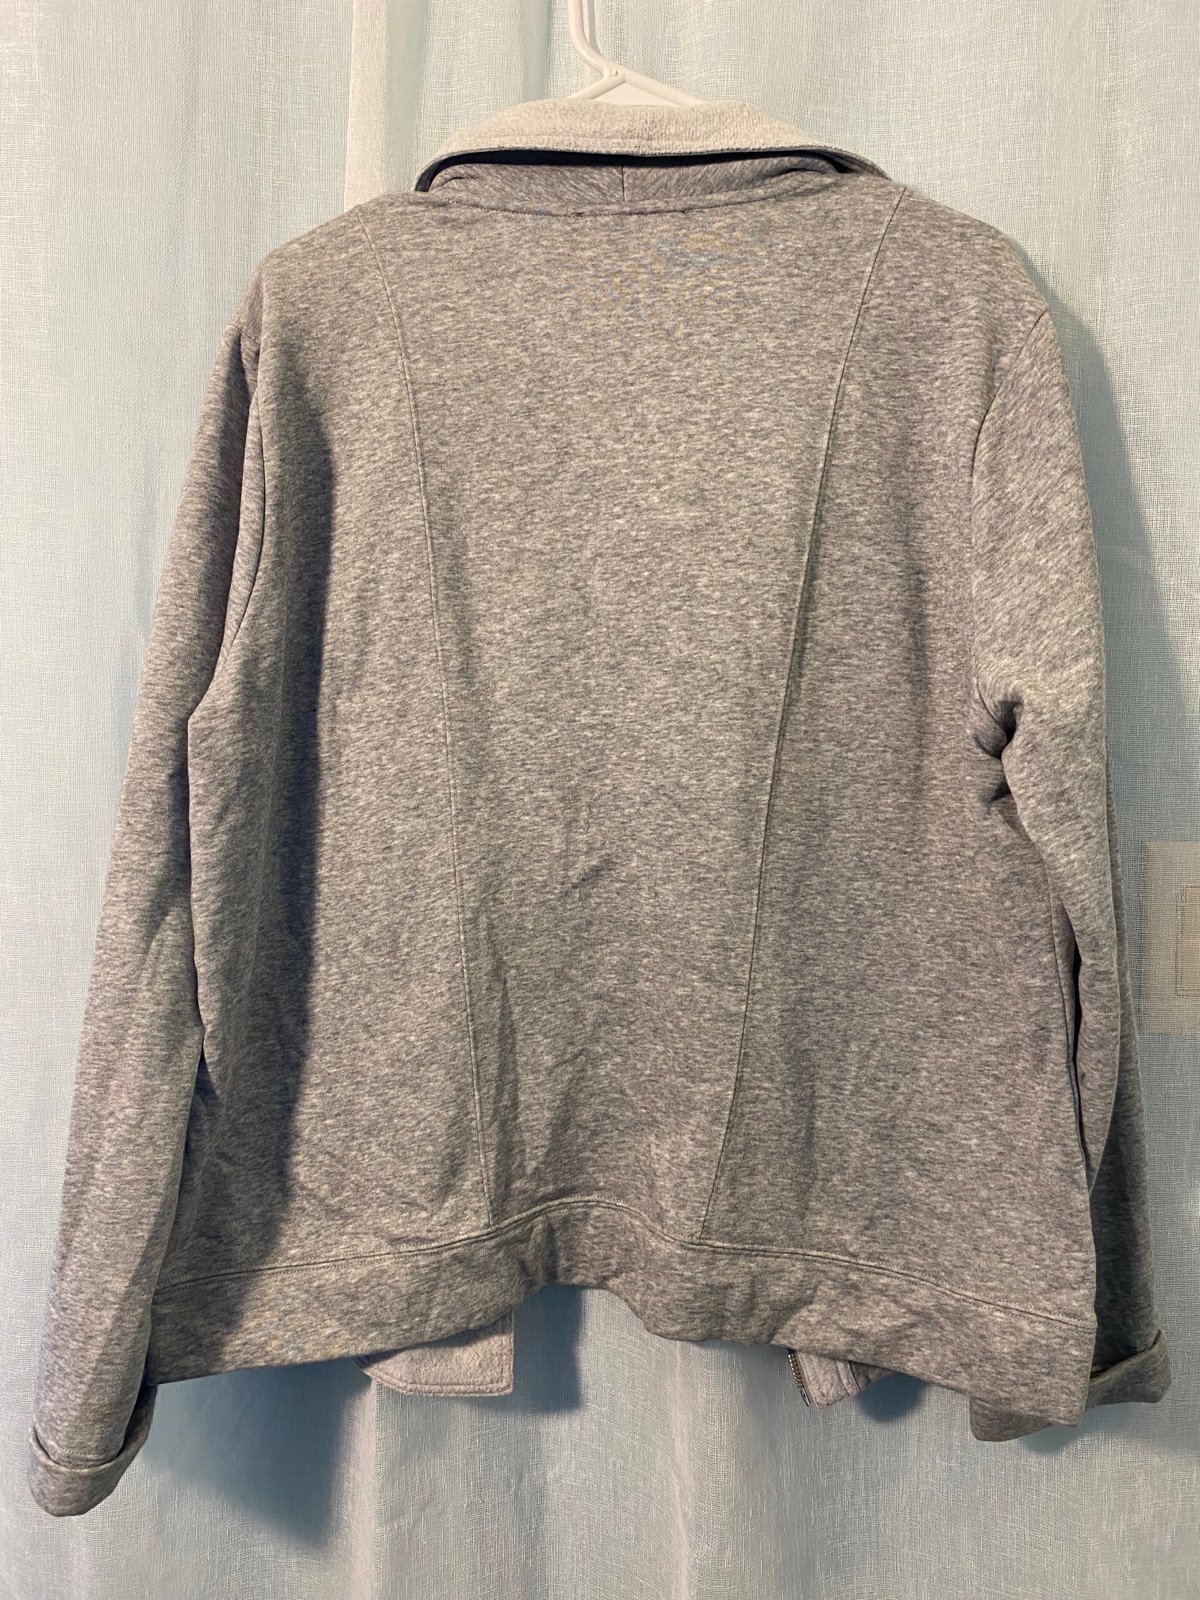 high discount Michael Kors zip down fuzzy sweater Gj411kM6v Discount